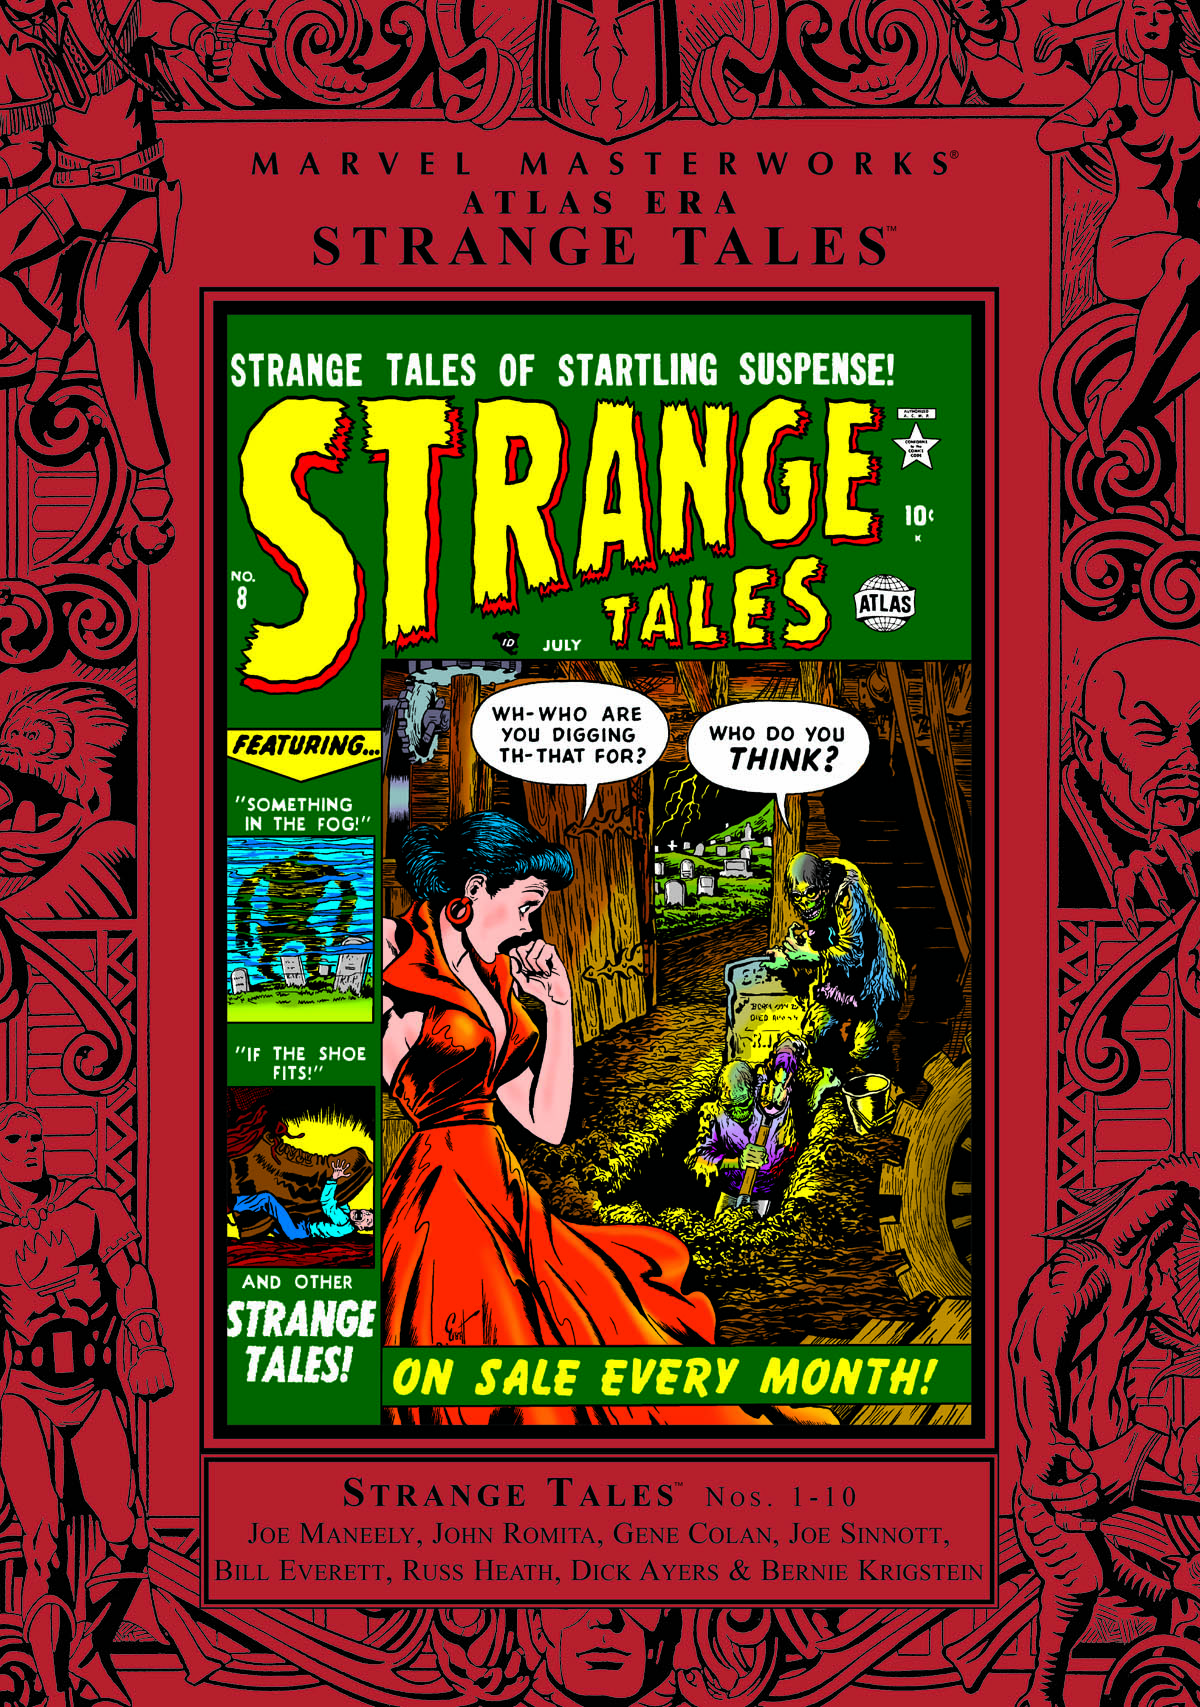 Marvel Masterworks: Atlas Era Strange Tales Vol. 1 (Trade Paperback)